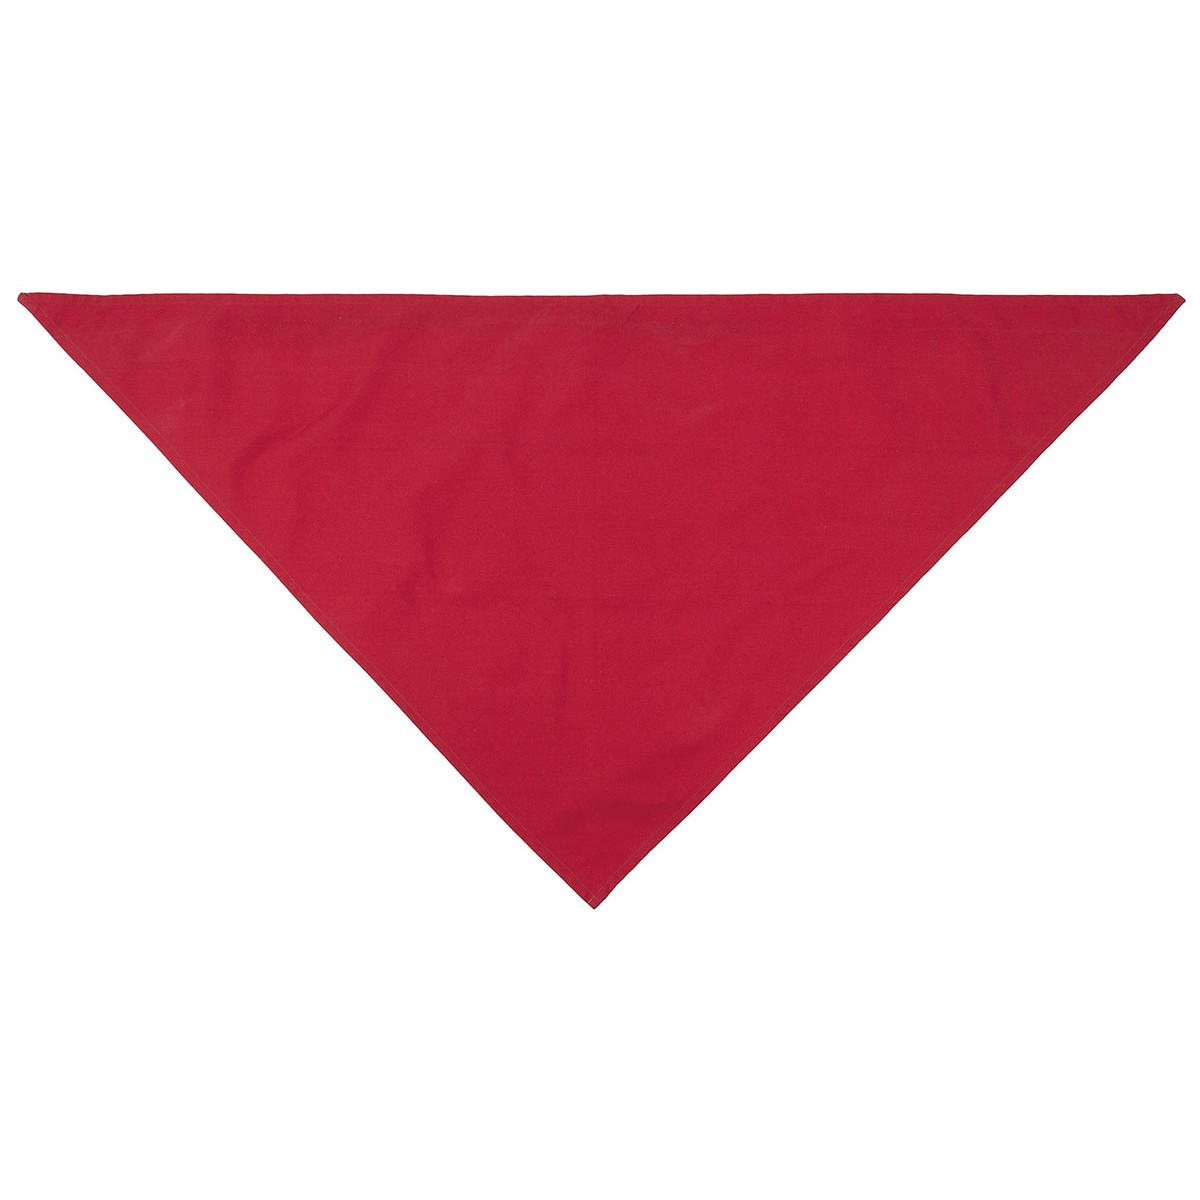 Šátek šéfkuchaře trojcípý červený Velká Británie originál